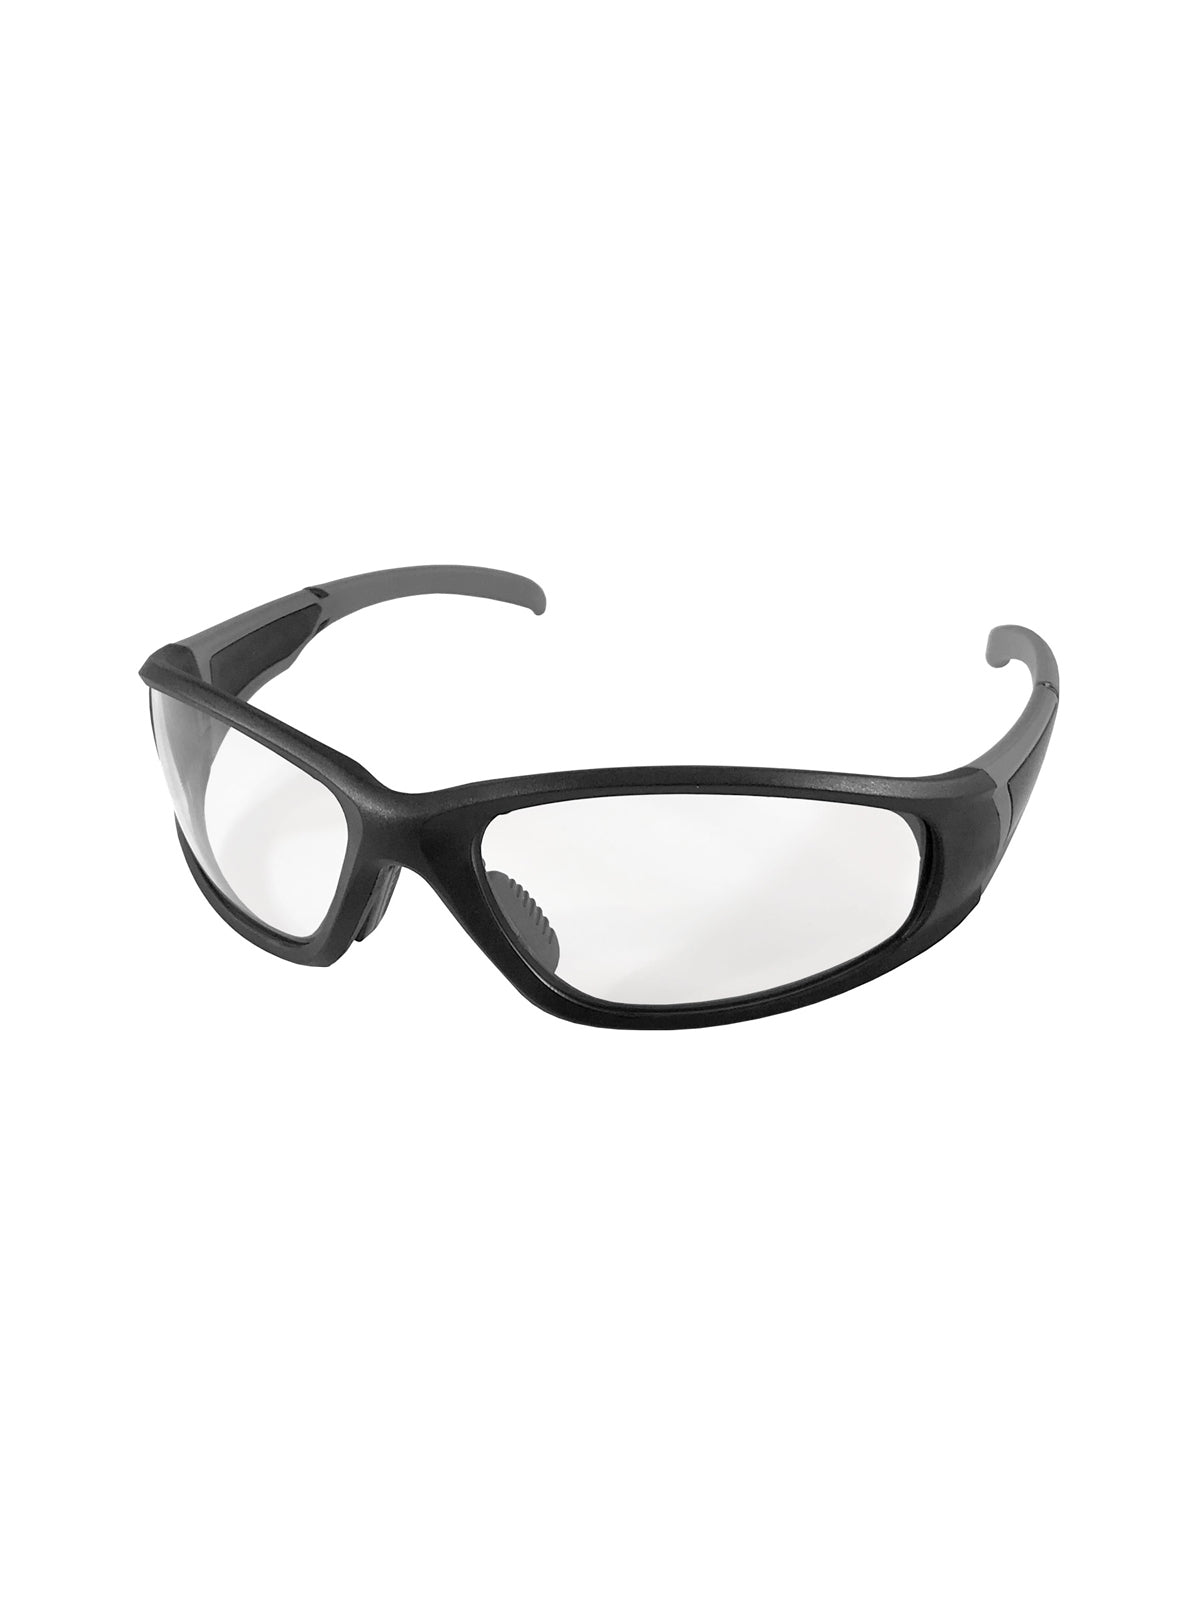 Sport Frame Designer Eyewear - 5430 - Black